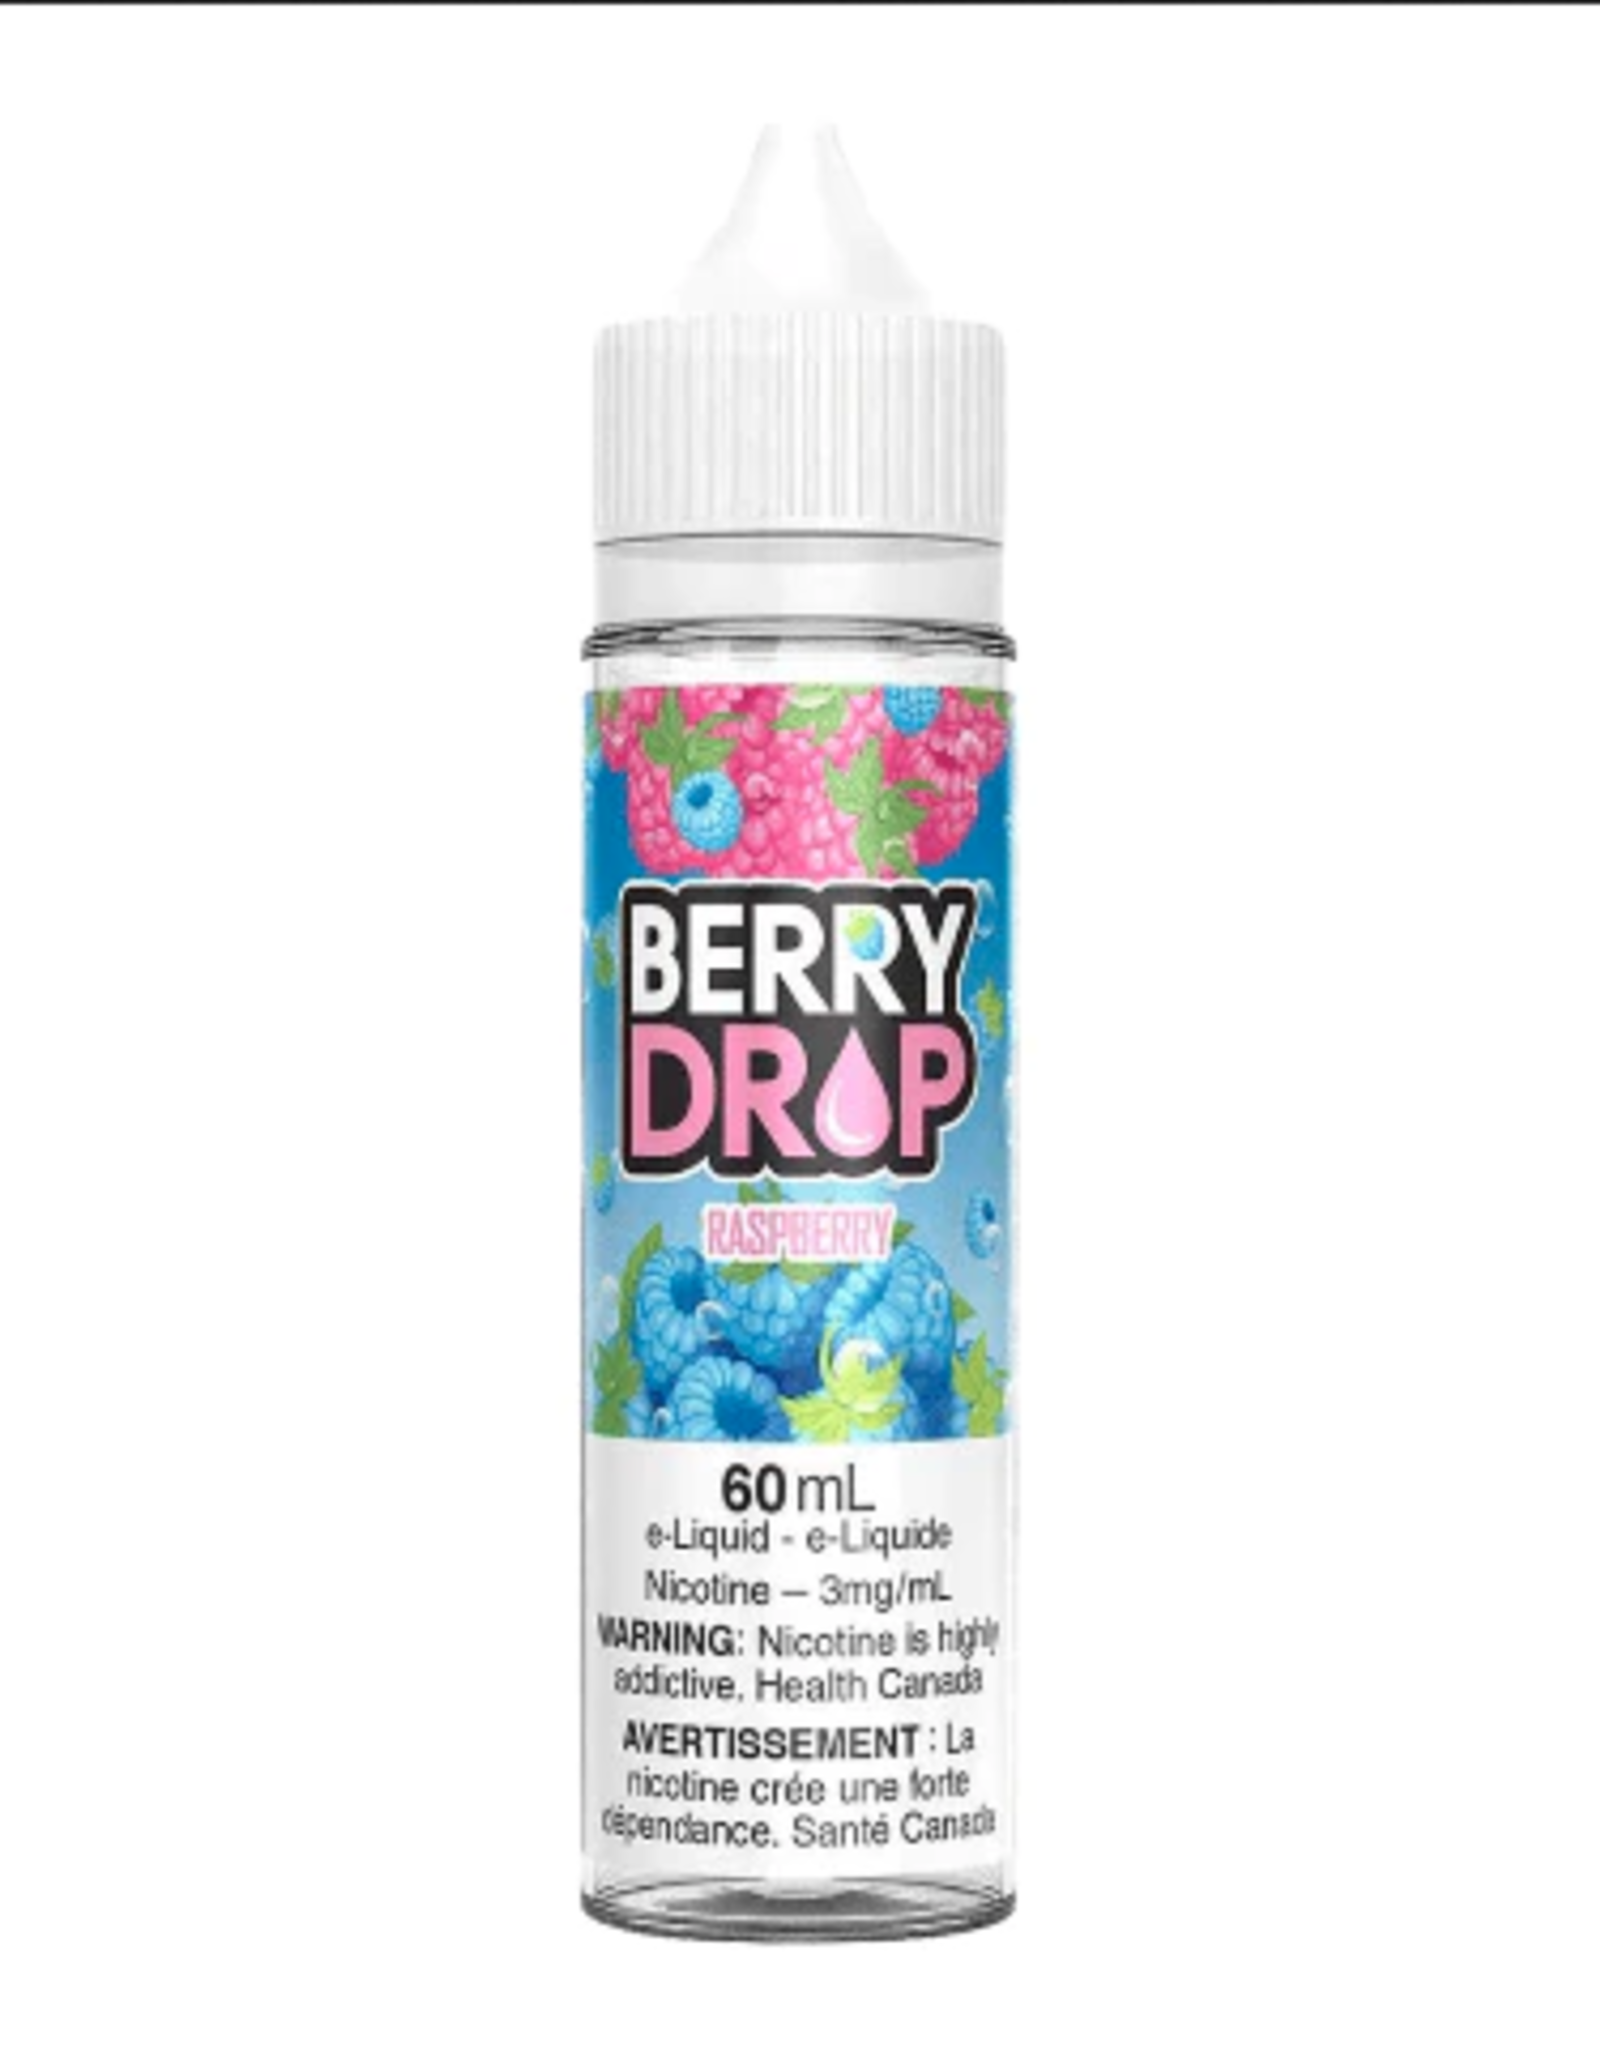 Berry Drop EXCISE 60ml Berry Drop - Raspberry